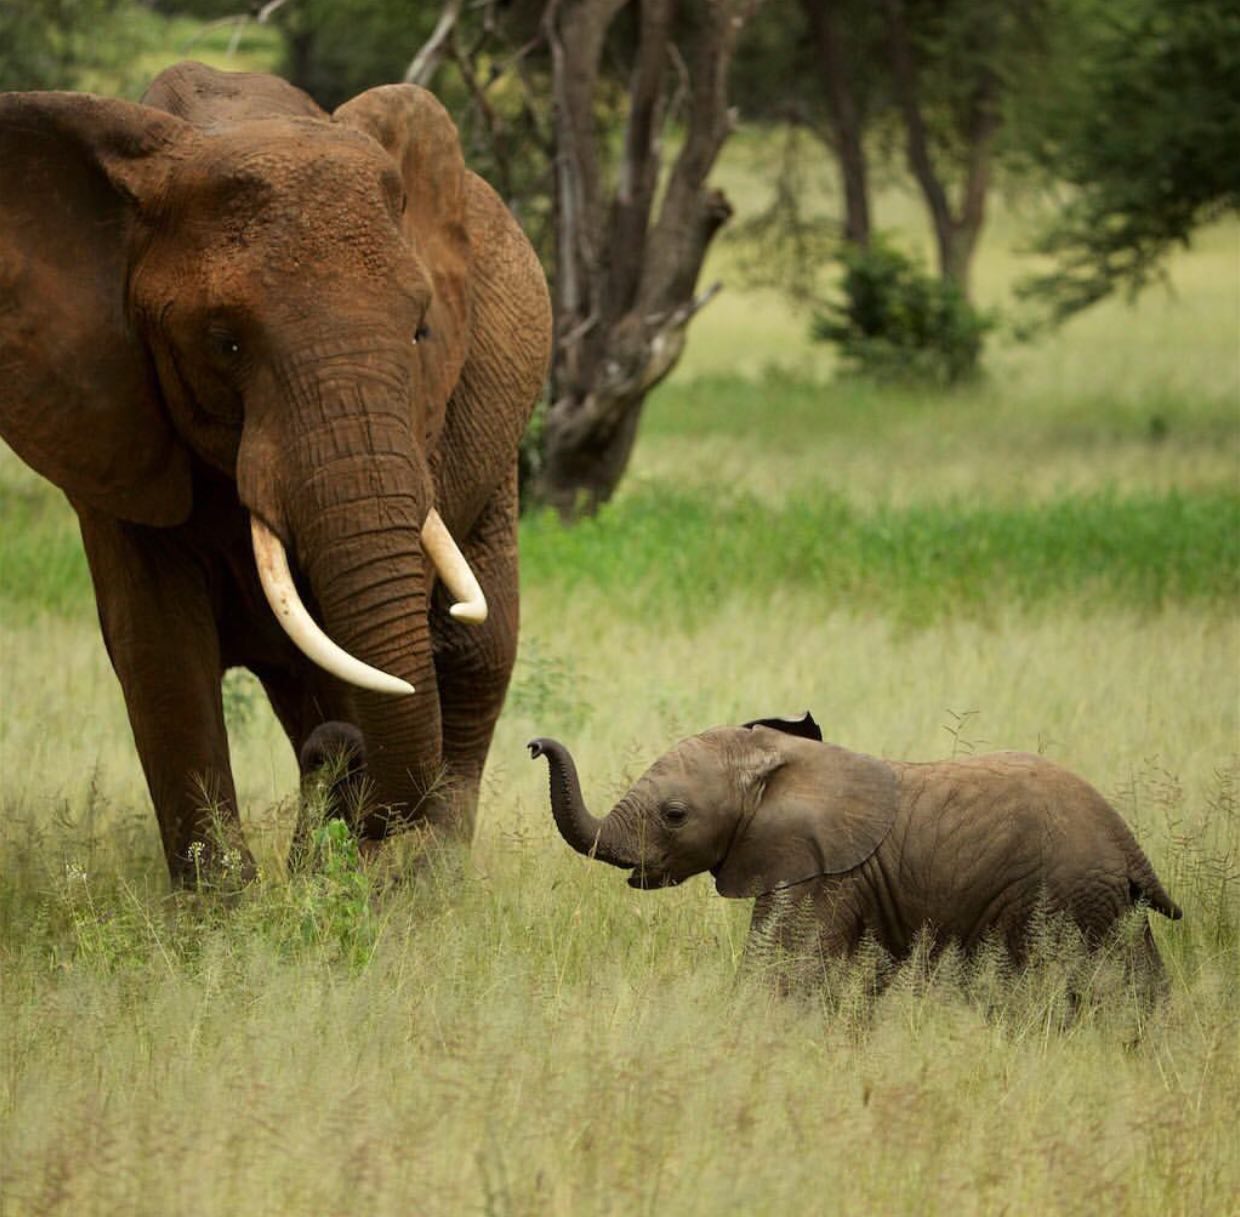 بچه فیل کوچک در کنار مادرش+عکس